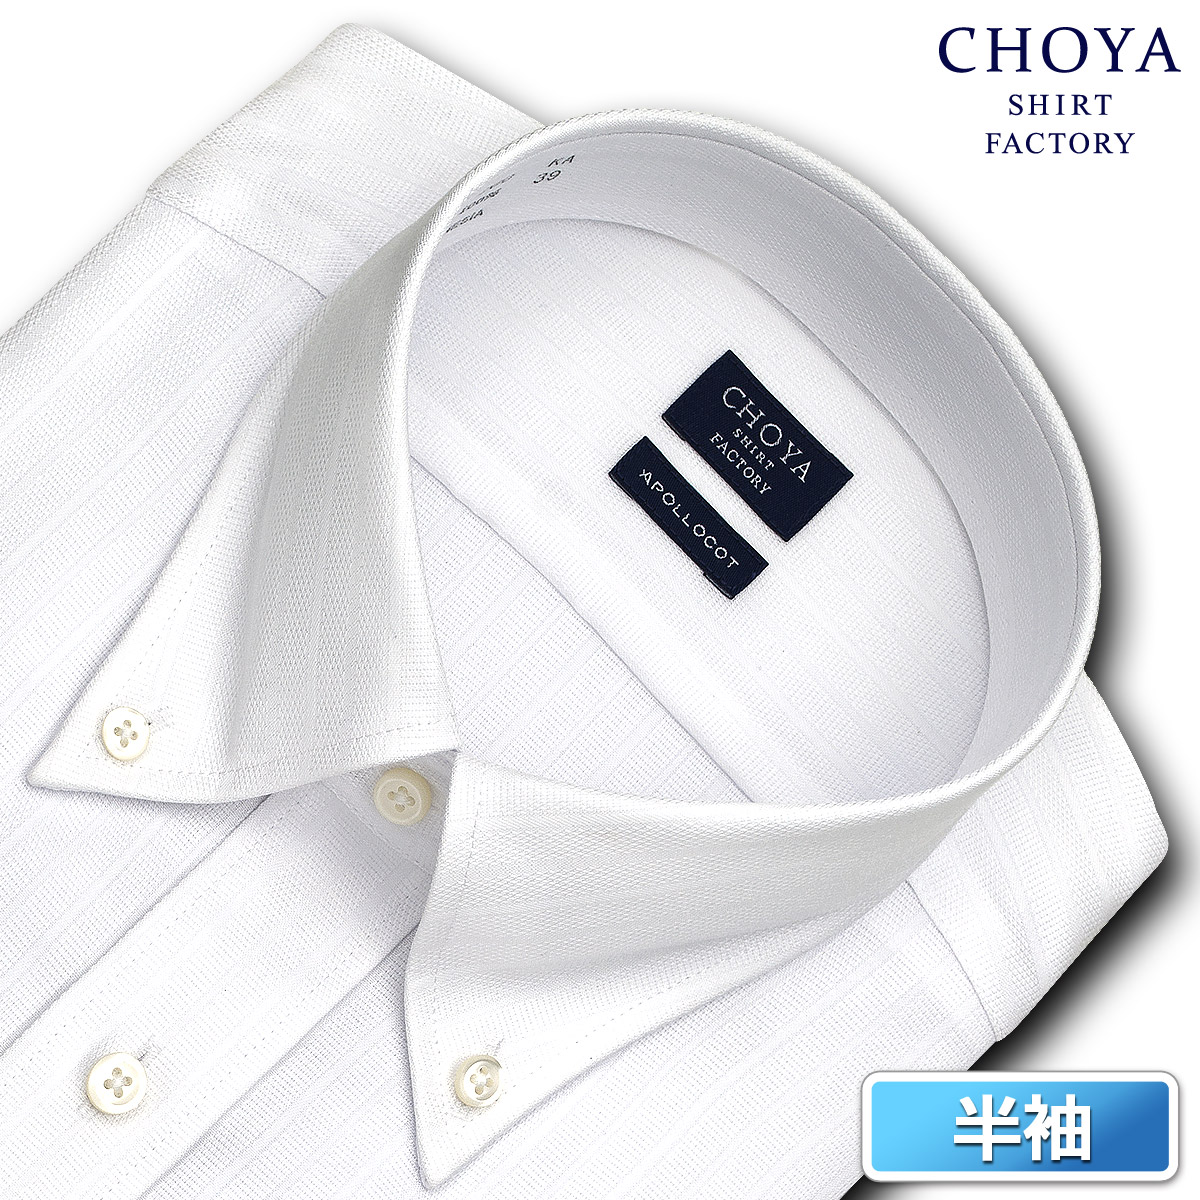 CHOYA SHIRT FACTORY 日清紡アポロコット 半袖 ワイシャツ メンズ 夏 形態安定加工白ドビーストライプボタンダウンシャツ|綿